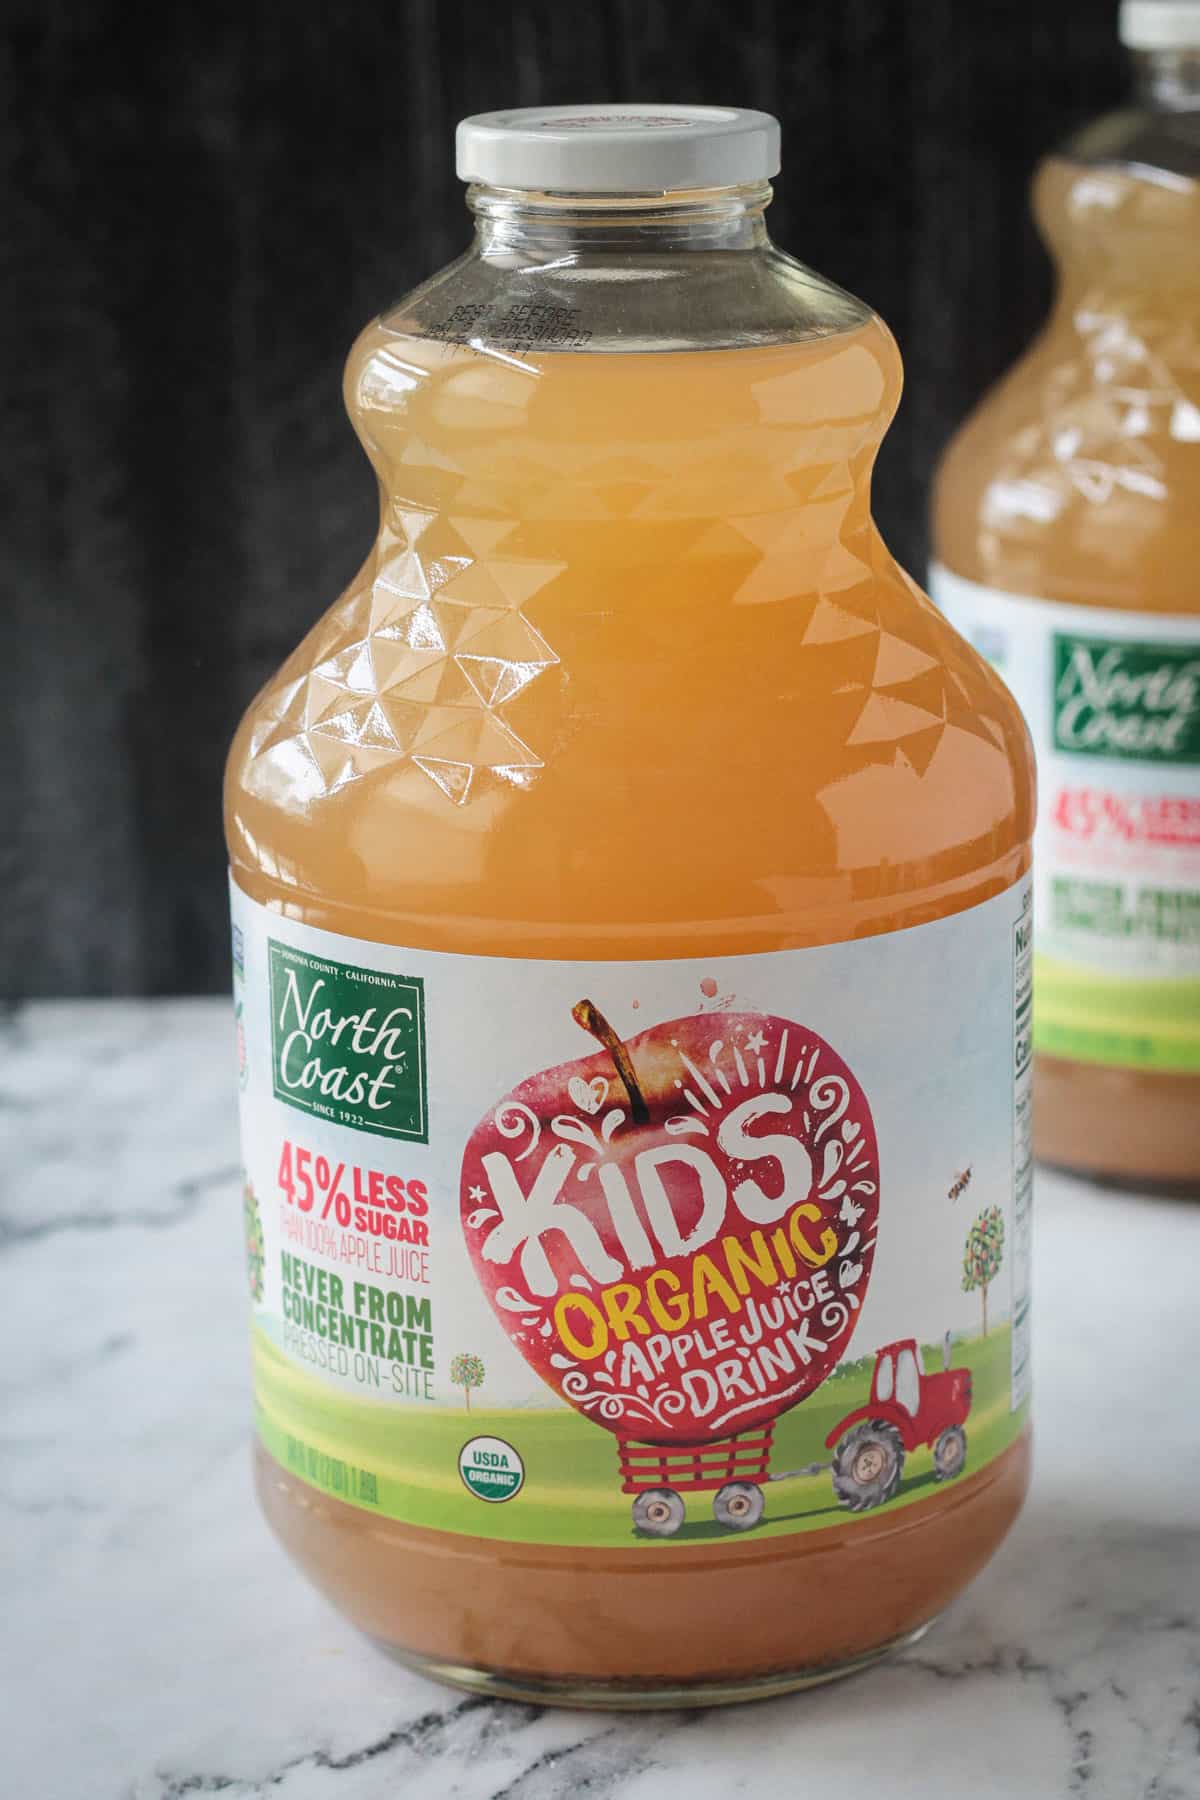 Bottle of North Coast Organic Kids Apple Juice Drink.